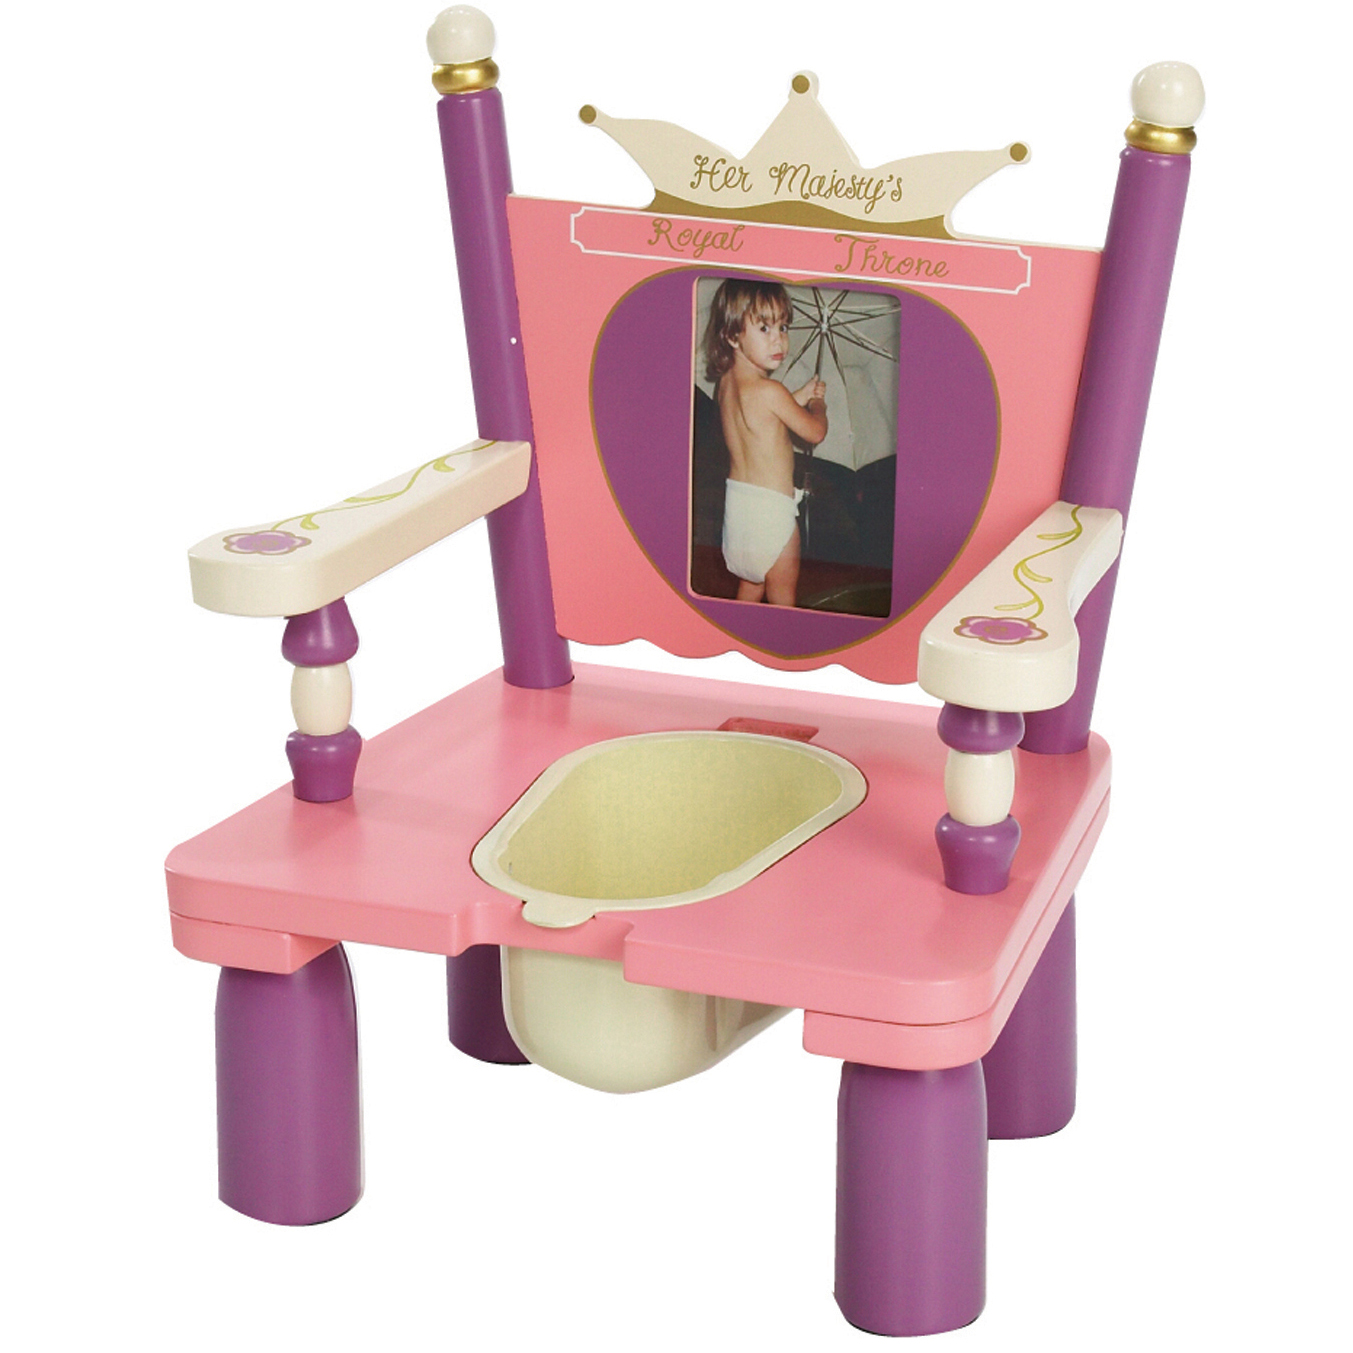 training potty chair